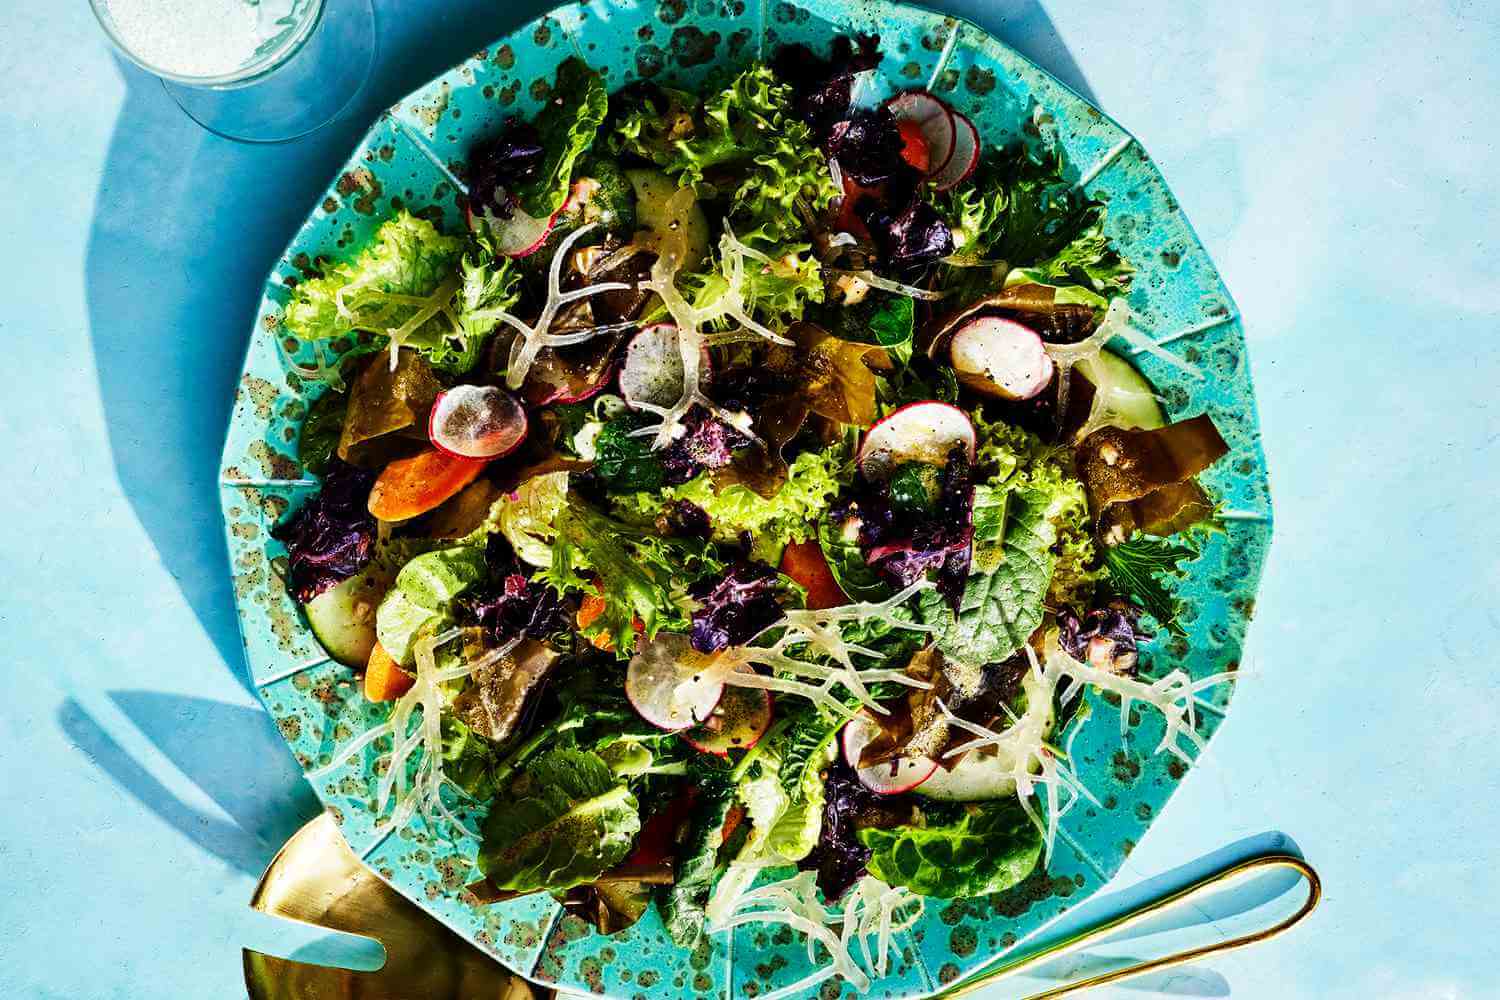 Image representing a seaweed salad platter